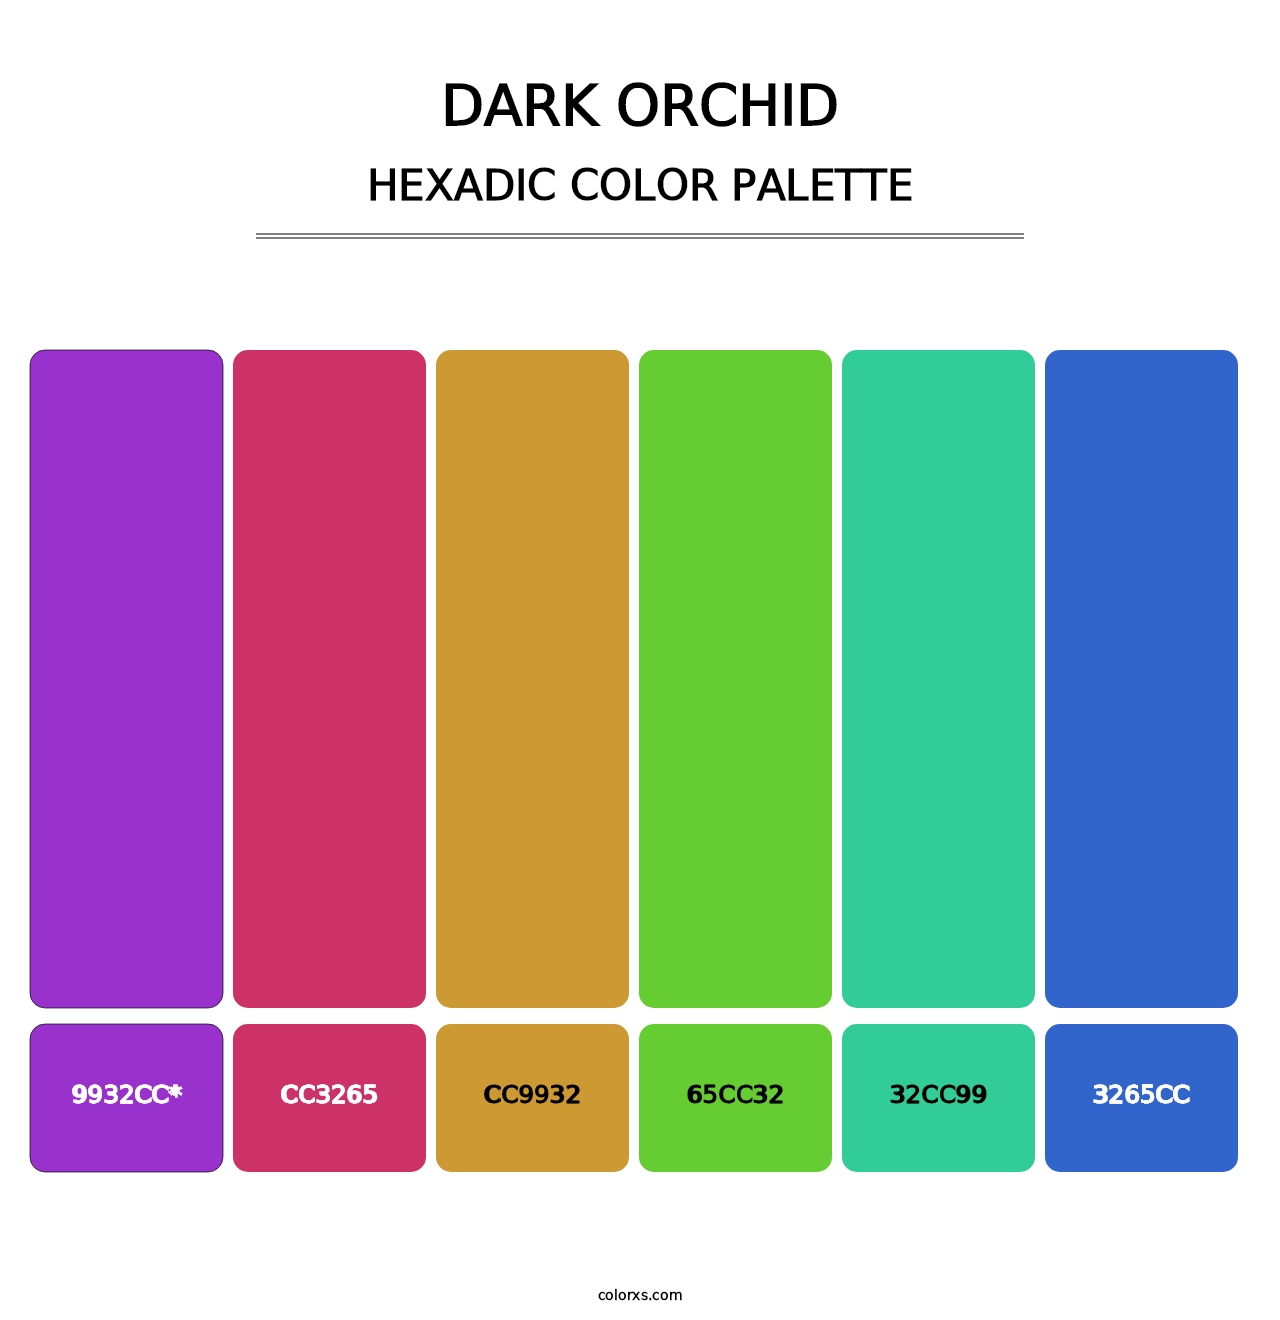 Dark Orchid - Hexadic Color Palette